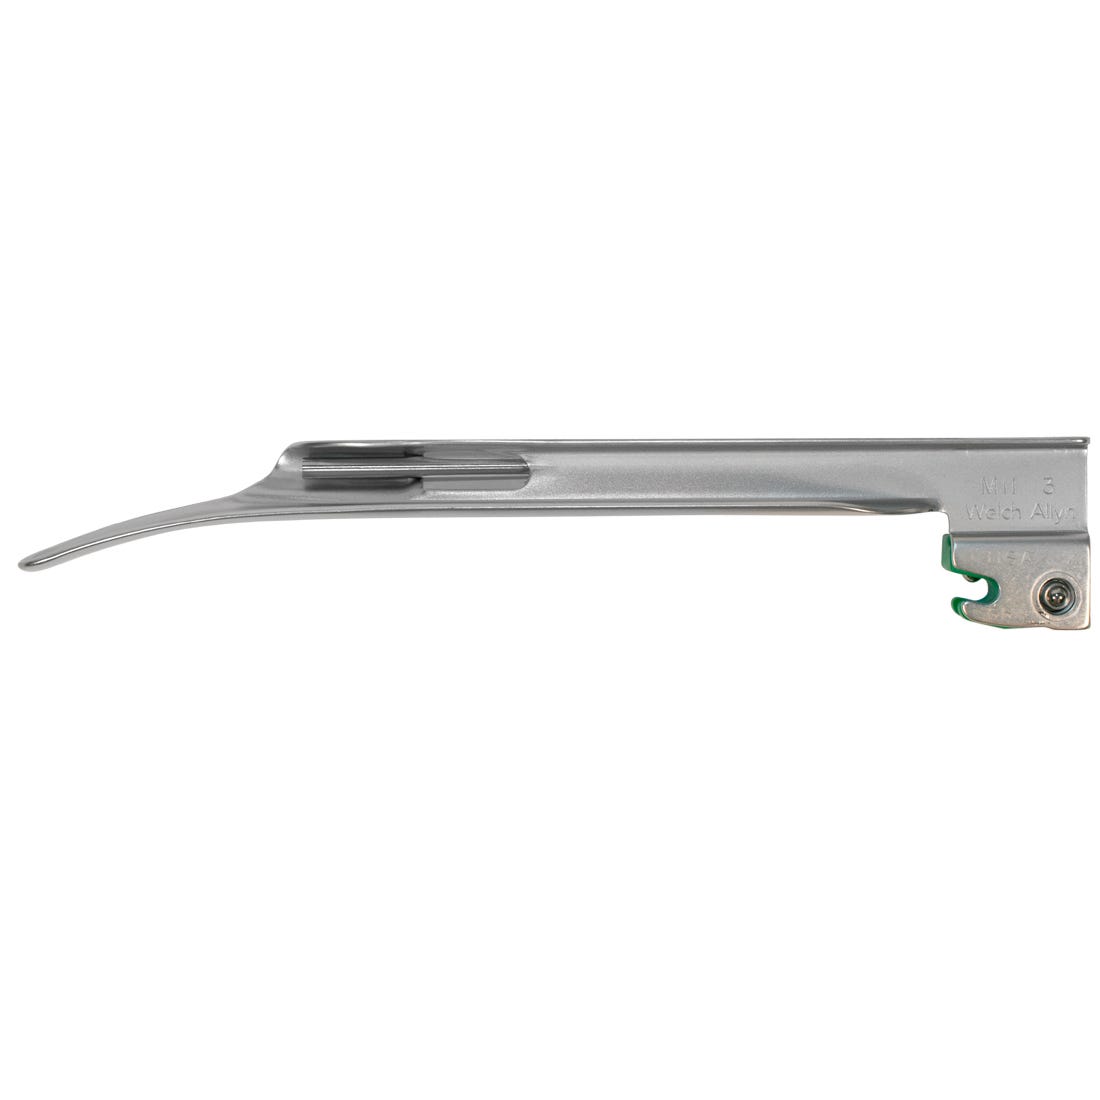 Welch Allyn Standard Fitting FiberOptic Laryngoscope Blades - Miller, Size 3, Fits Welch Allyn Fiberoptic Handle